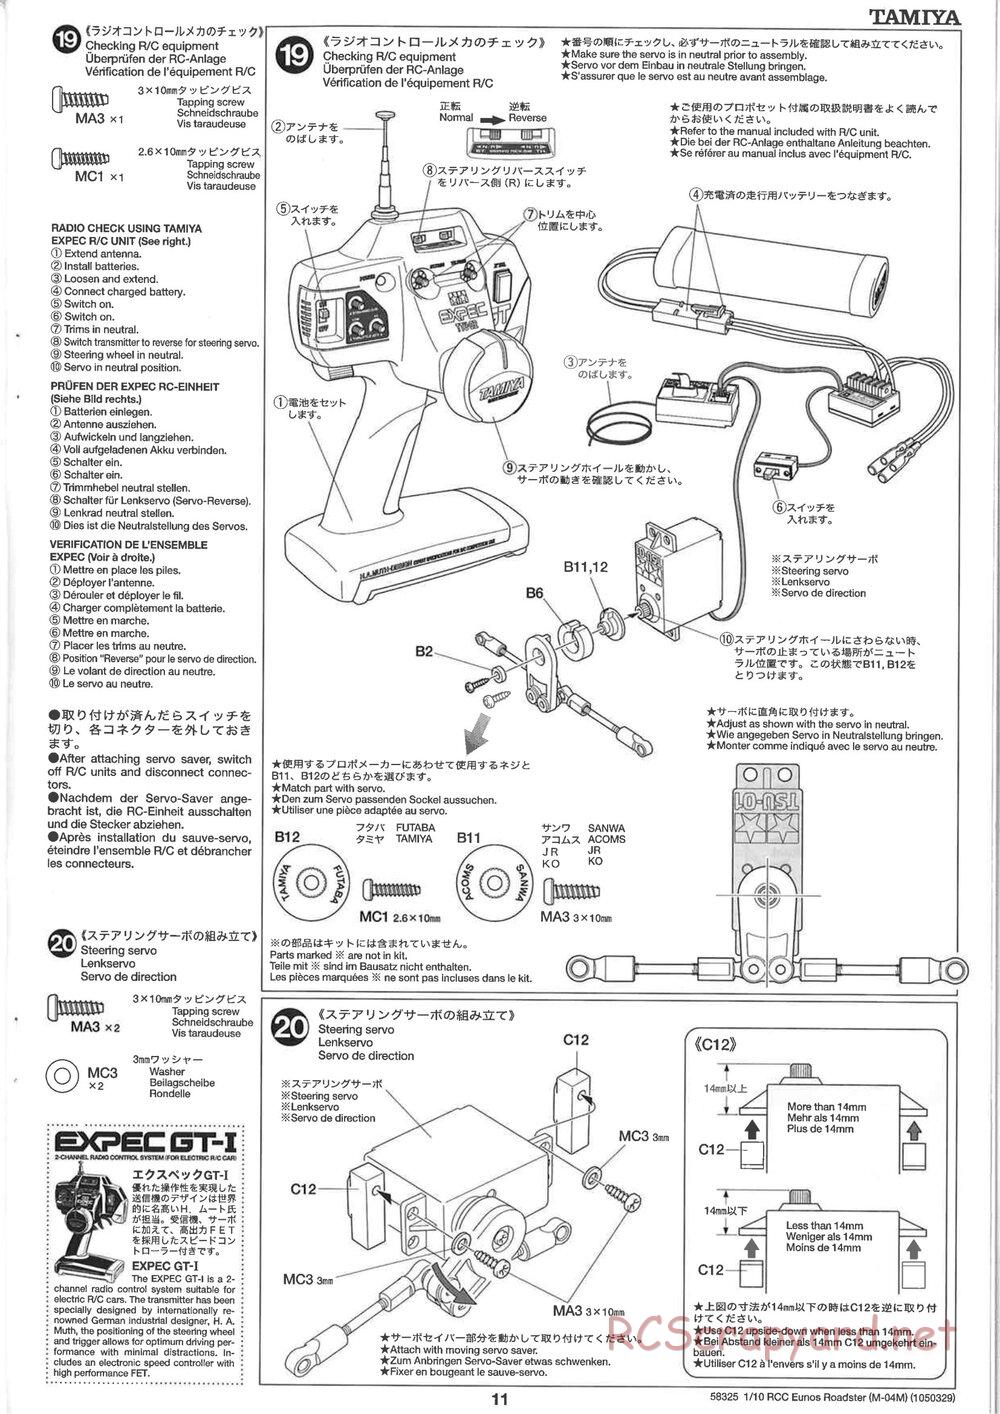 Tamiya - Eunos Roadster - M04M Chassis - Manual - Page 11